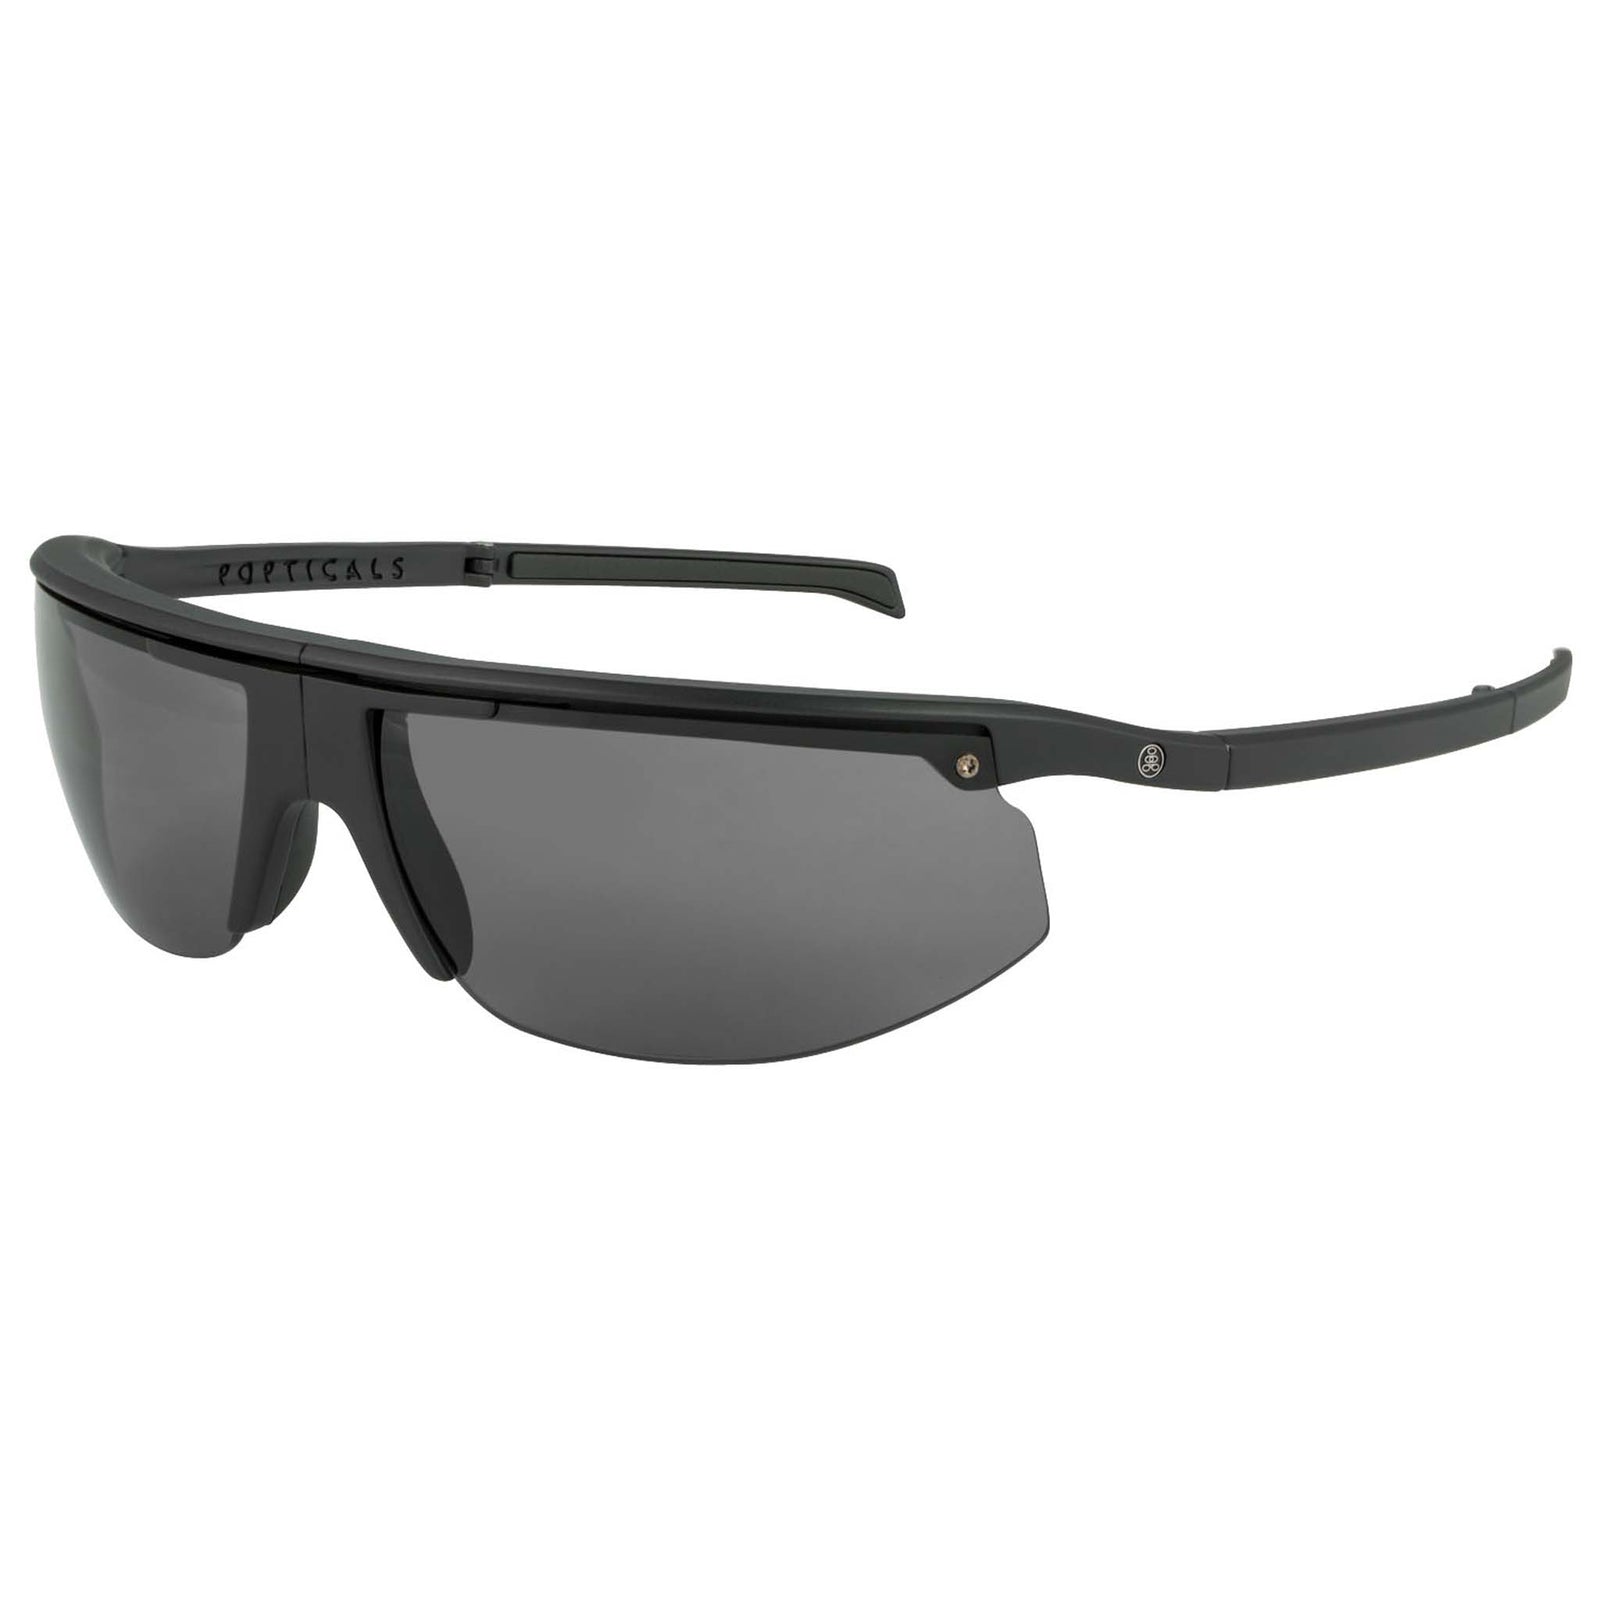 Popticals, Premium Compact Sunglasses, PopStar, 010040-BMGS, Standard Sunglasses, Matte Black Frame, Gray Lenses, Glam View